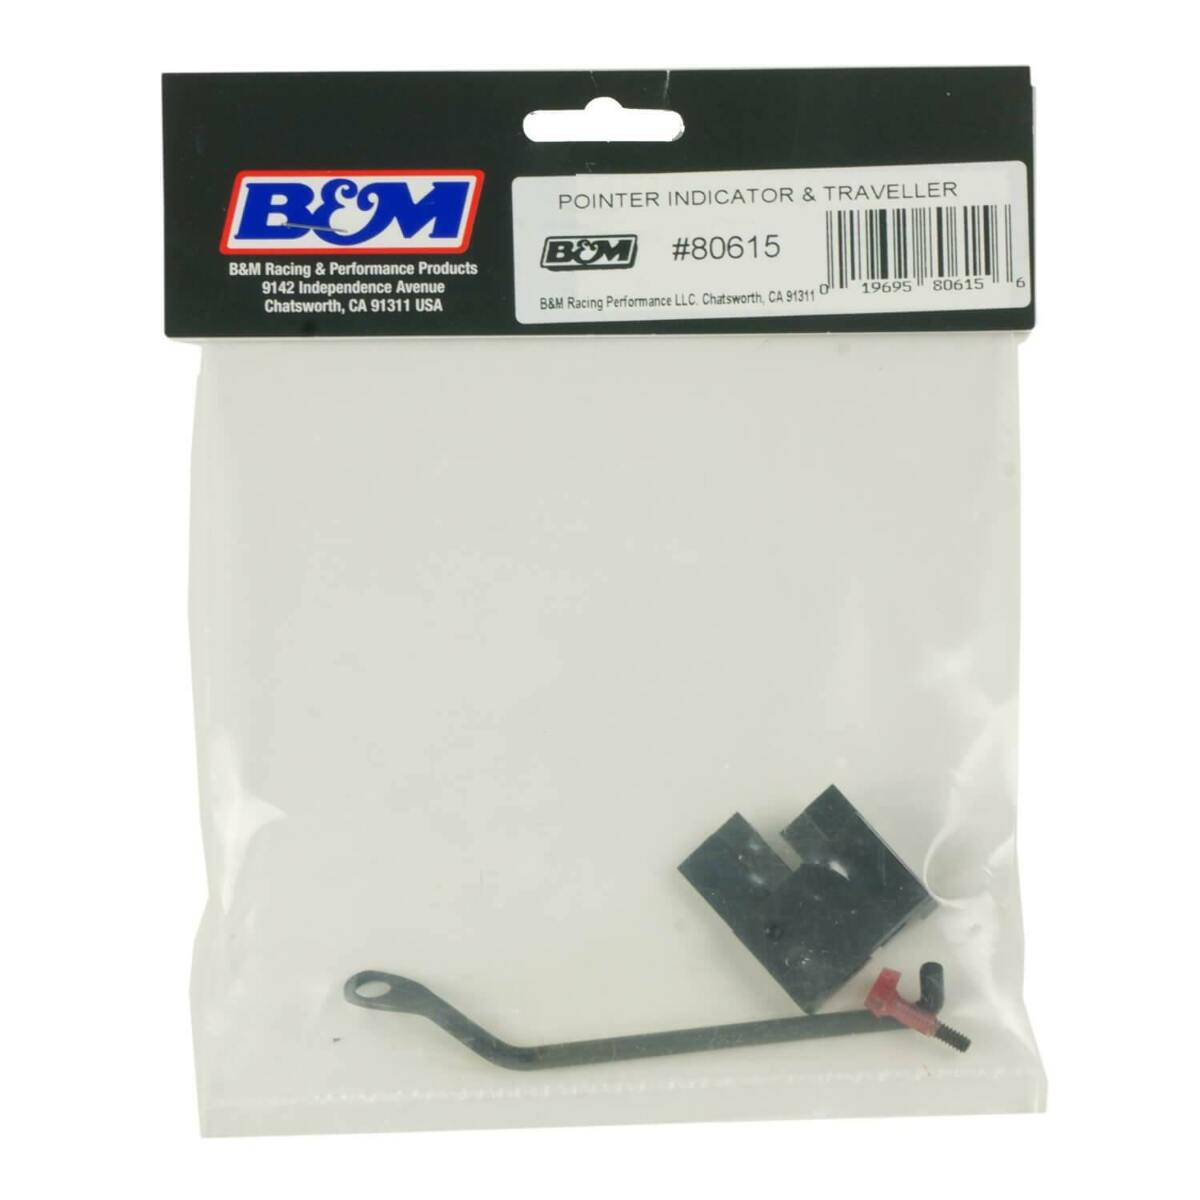 B&M Indicator Cable -Pointer/Traveler - 80615